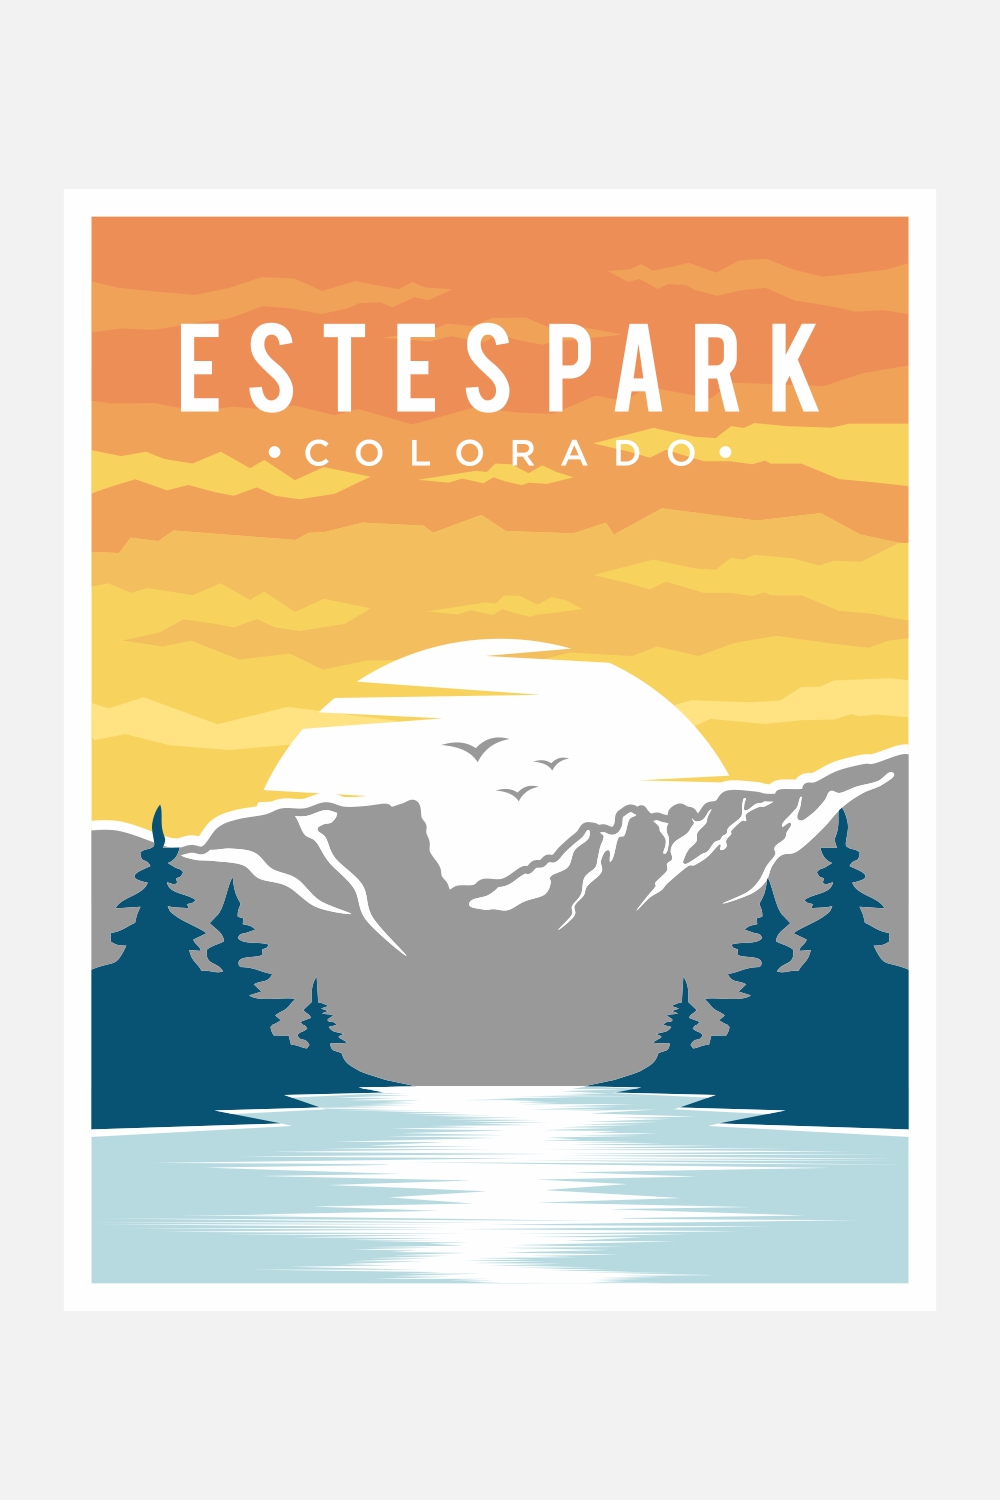 Estes Park poster vector illustration design – Only $7 pinterest preview image.